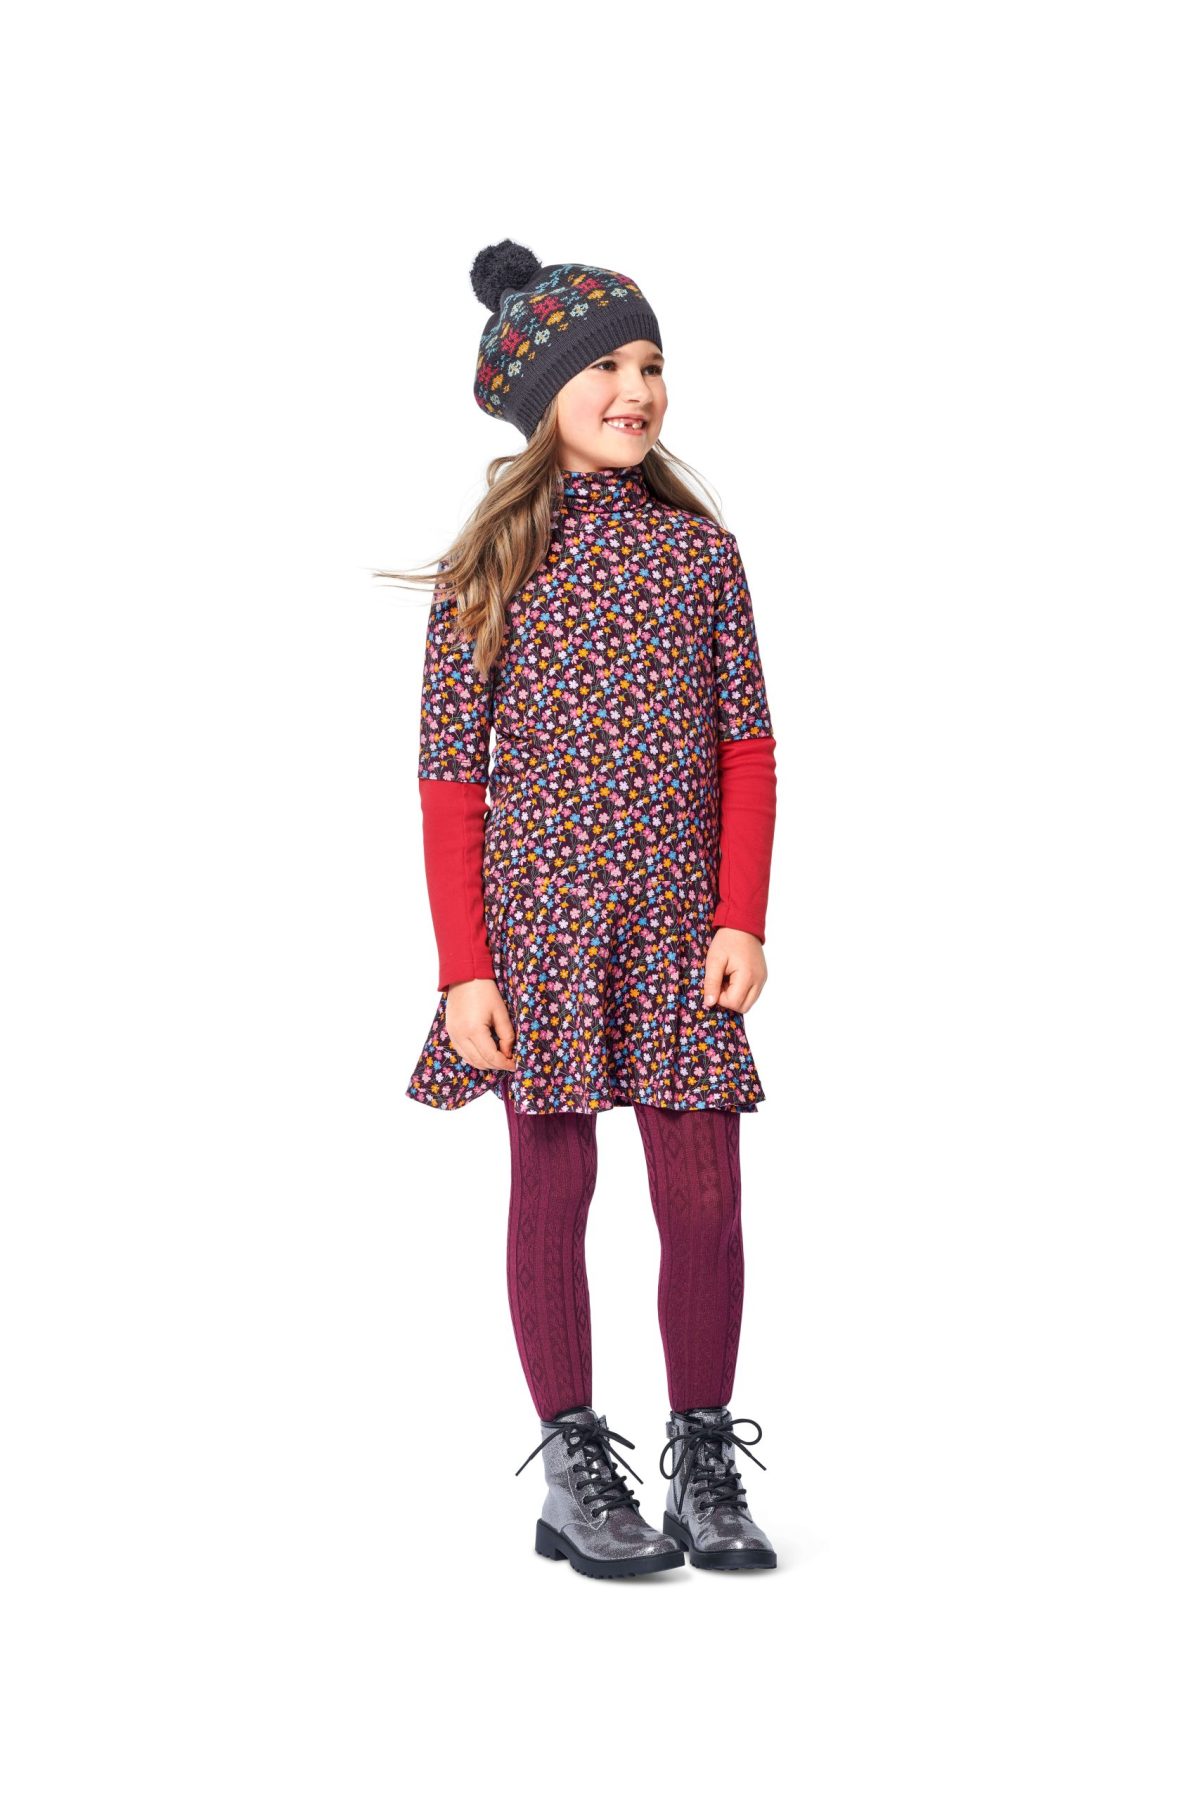 Burda Style Pattern 9272 Children's Top and Dress